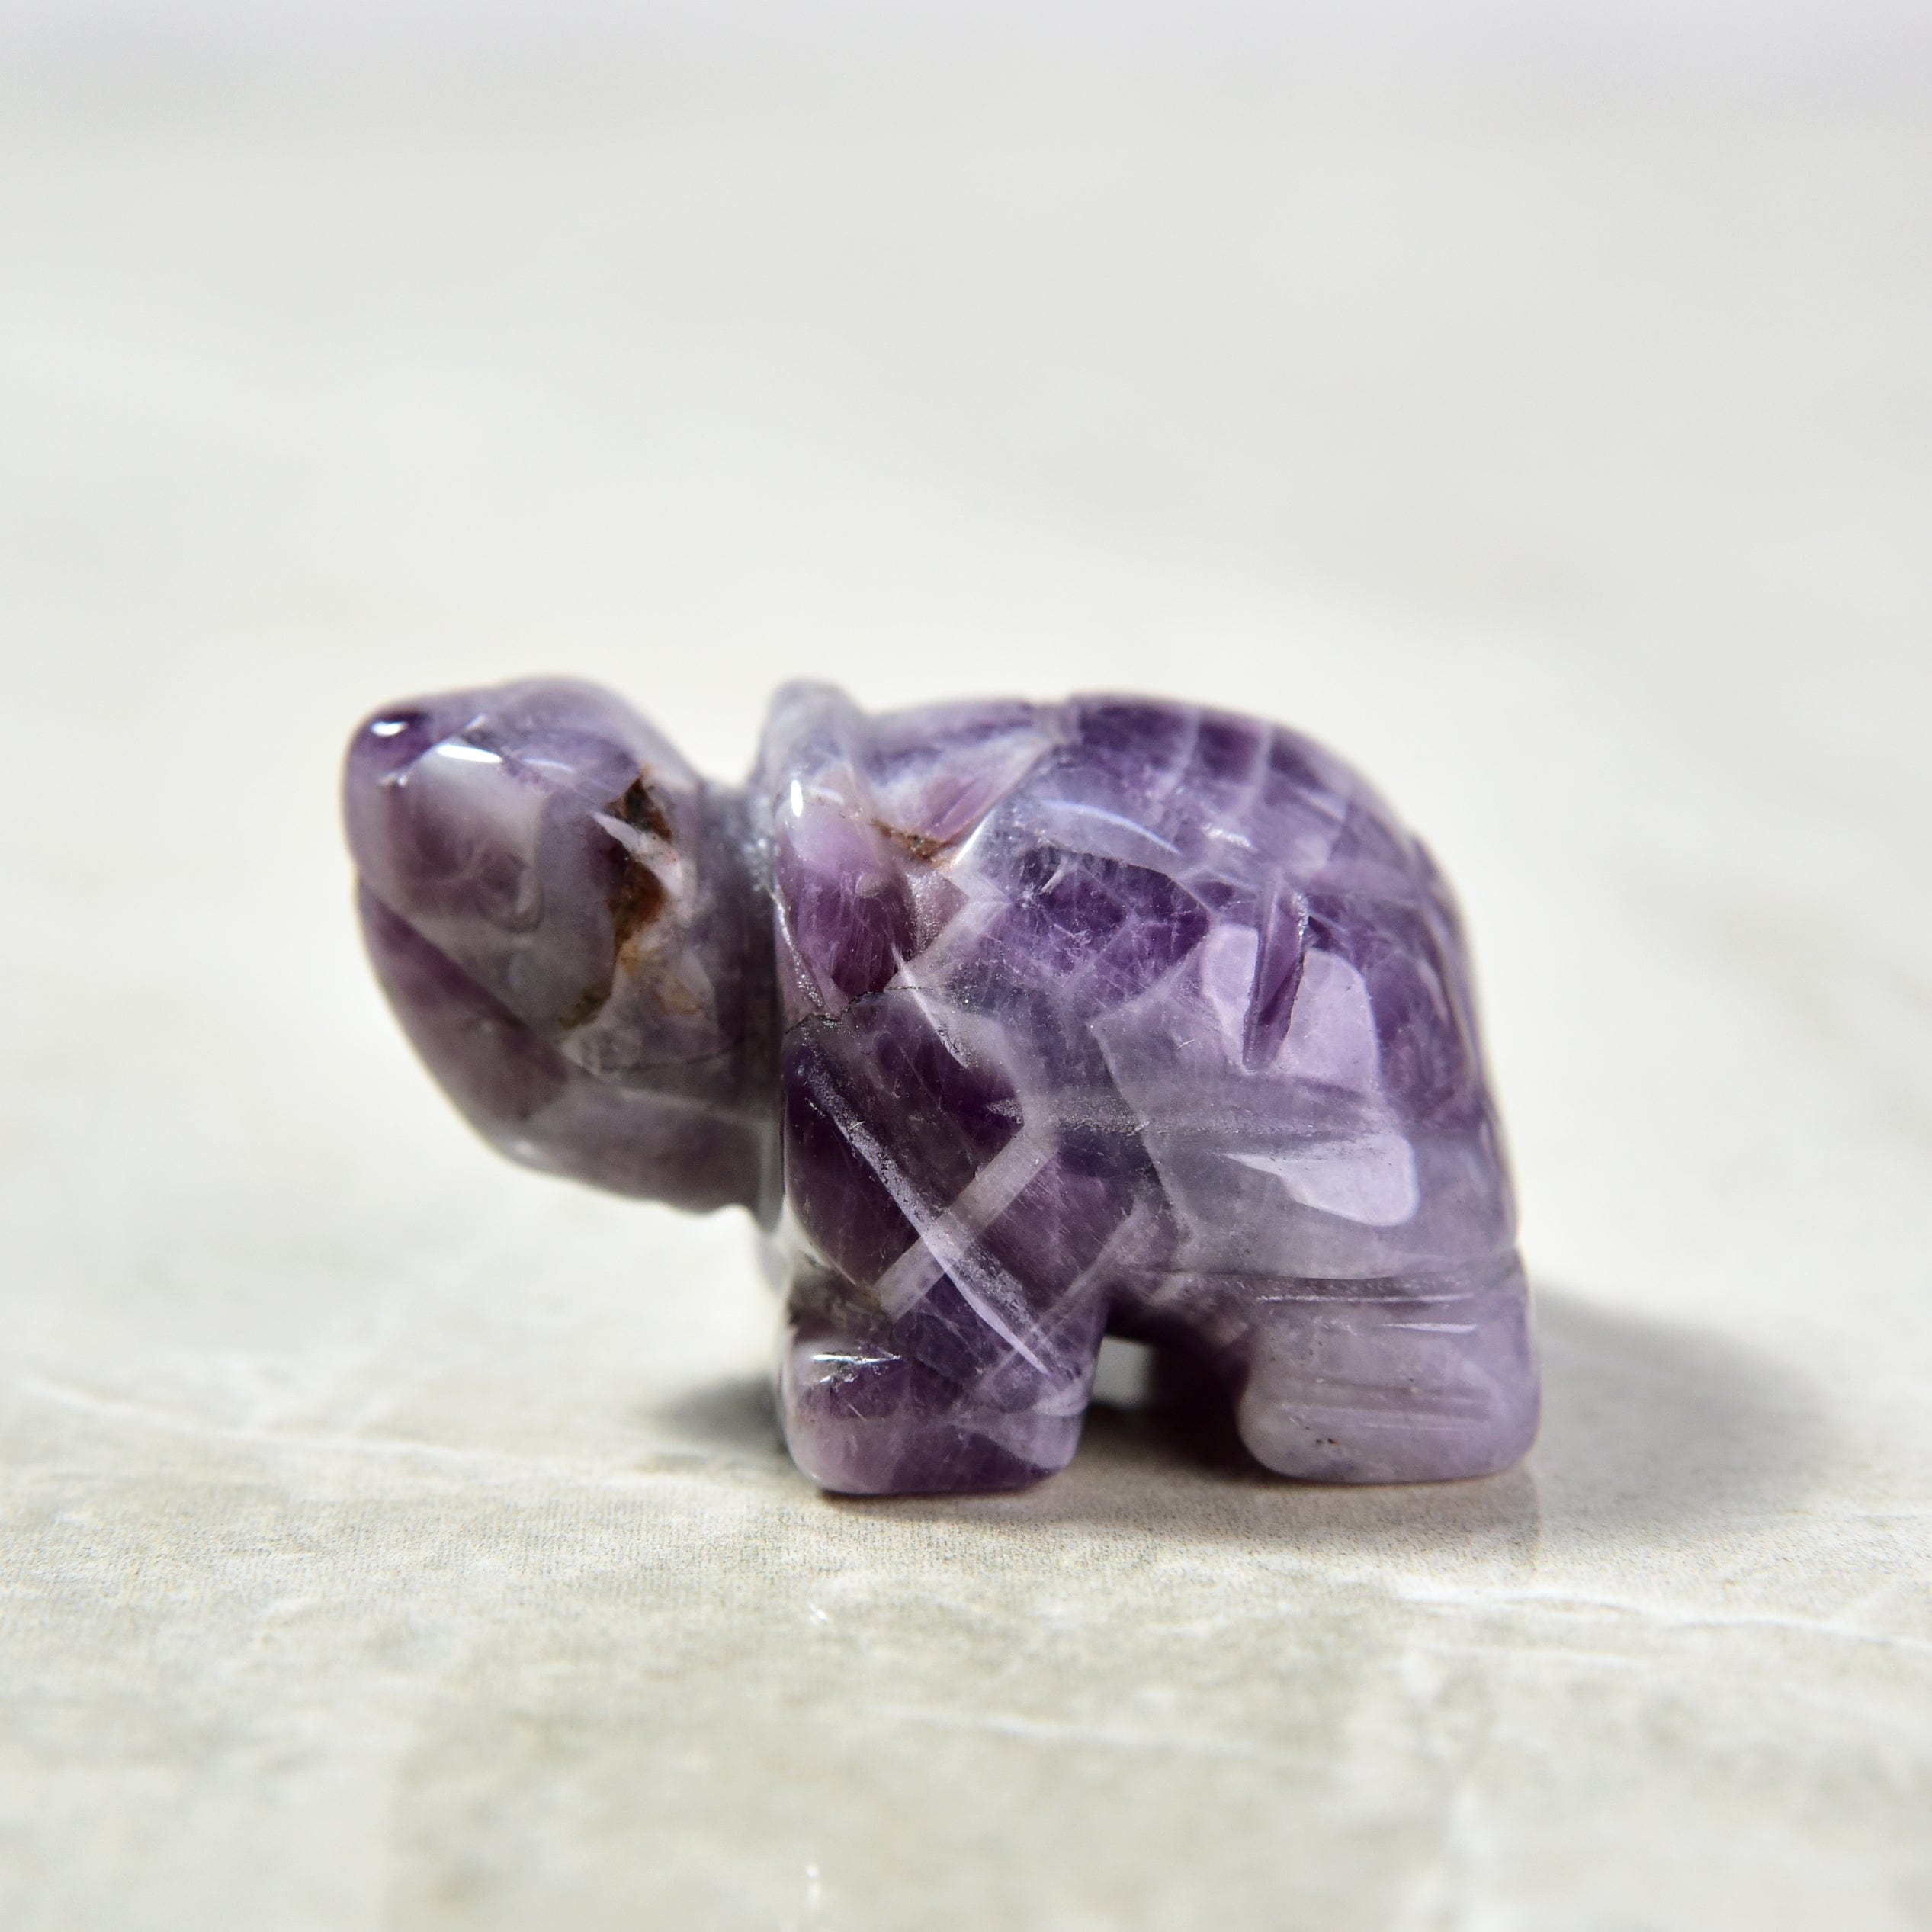 KALIFANO Gemstone Carvings 1.5" Amethyst Turtle Natural Gemstone Carving CV13-T-AM